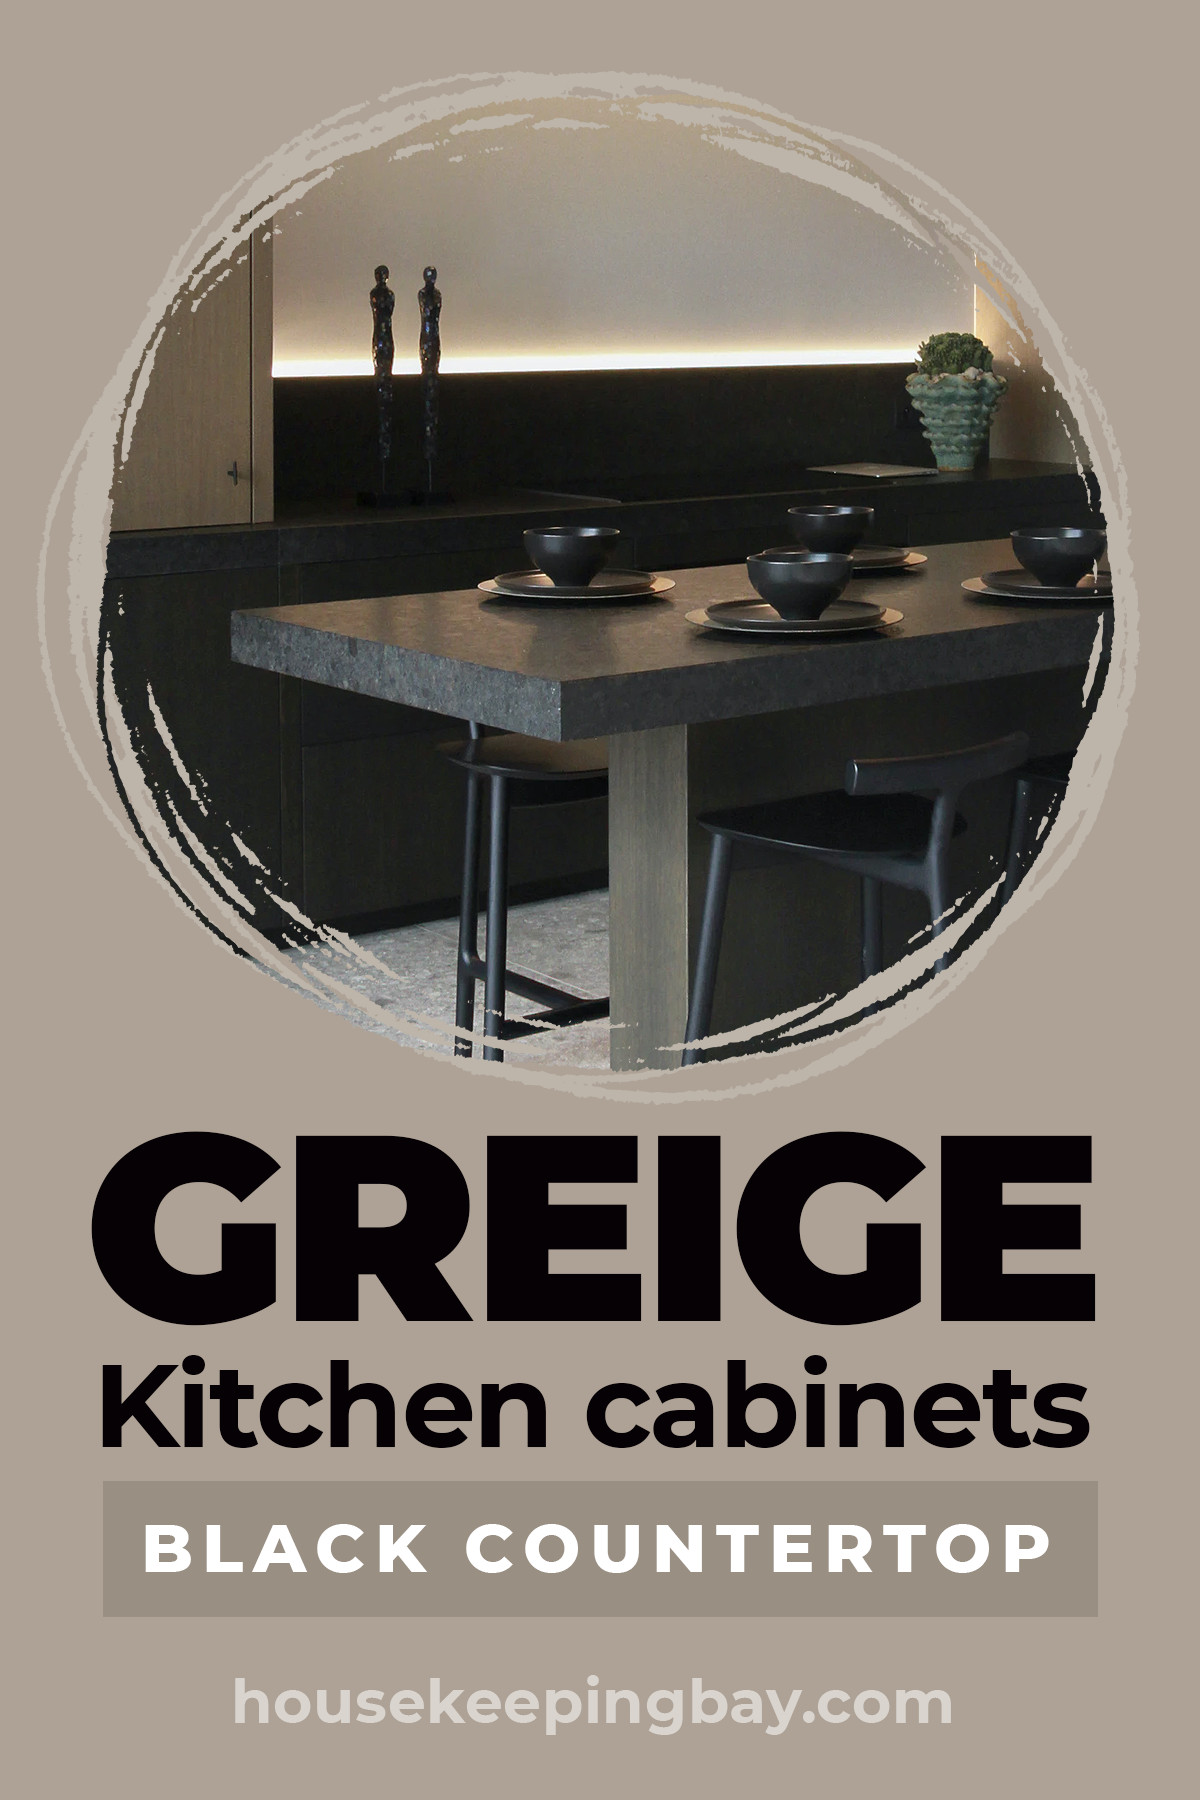 Greige kitchen cabinets – black countertop